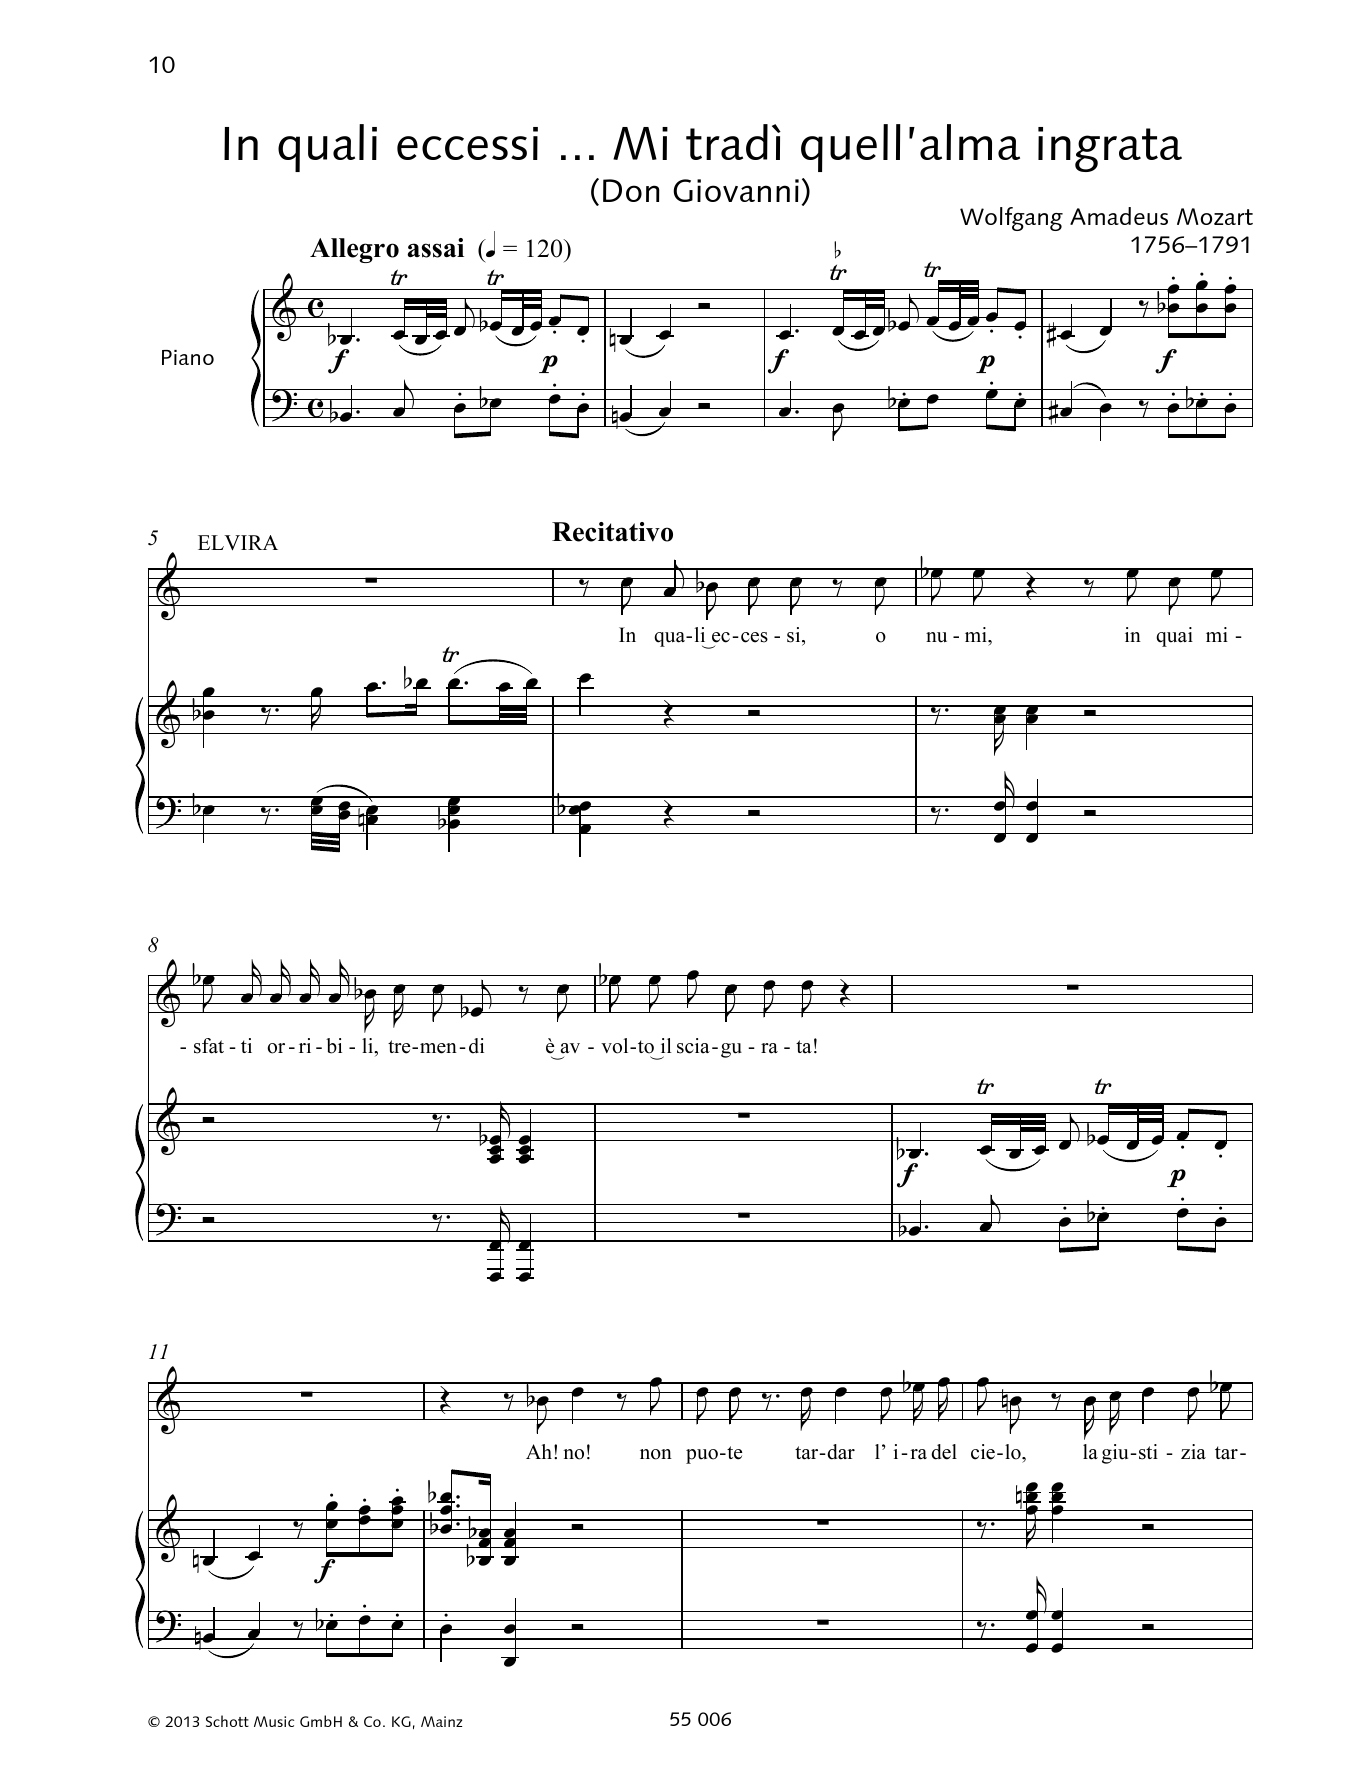 Wolfgang Amadeus Mozart Mi tradì quell'alma ingrata Sheet Music Notes & Chords for Piano & Vocal - Download or Print PDF